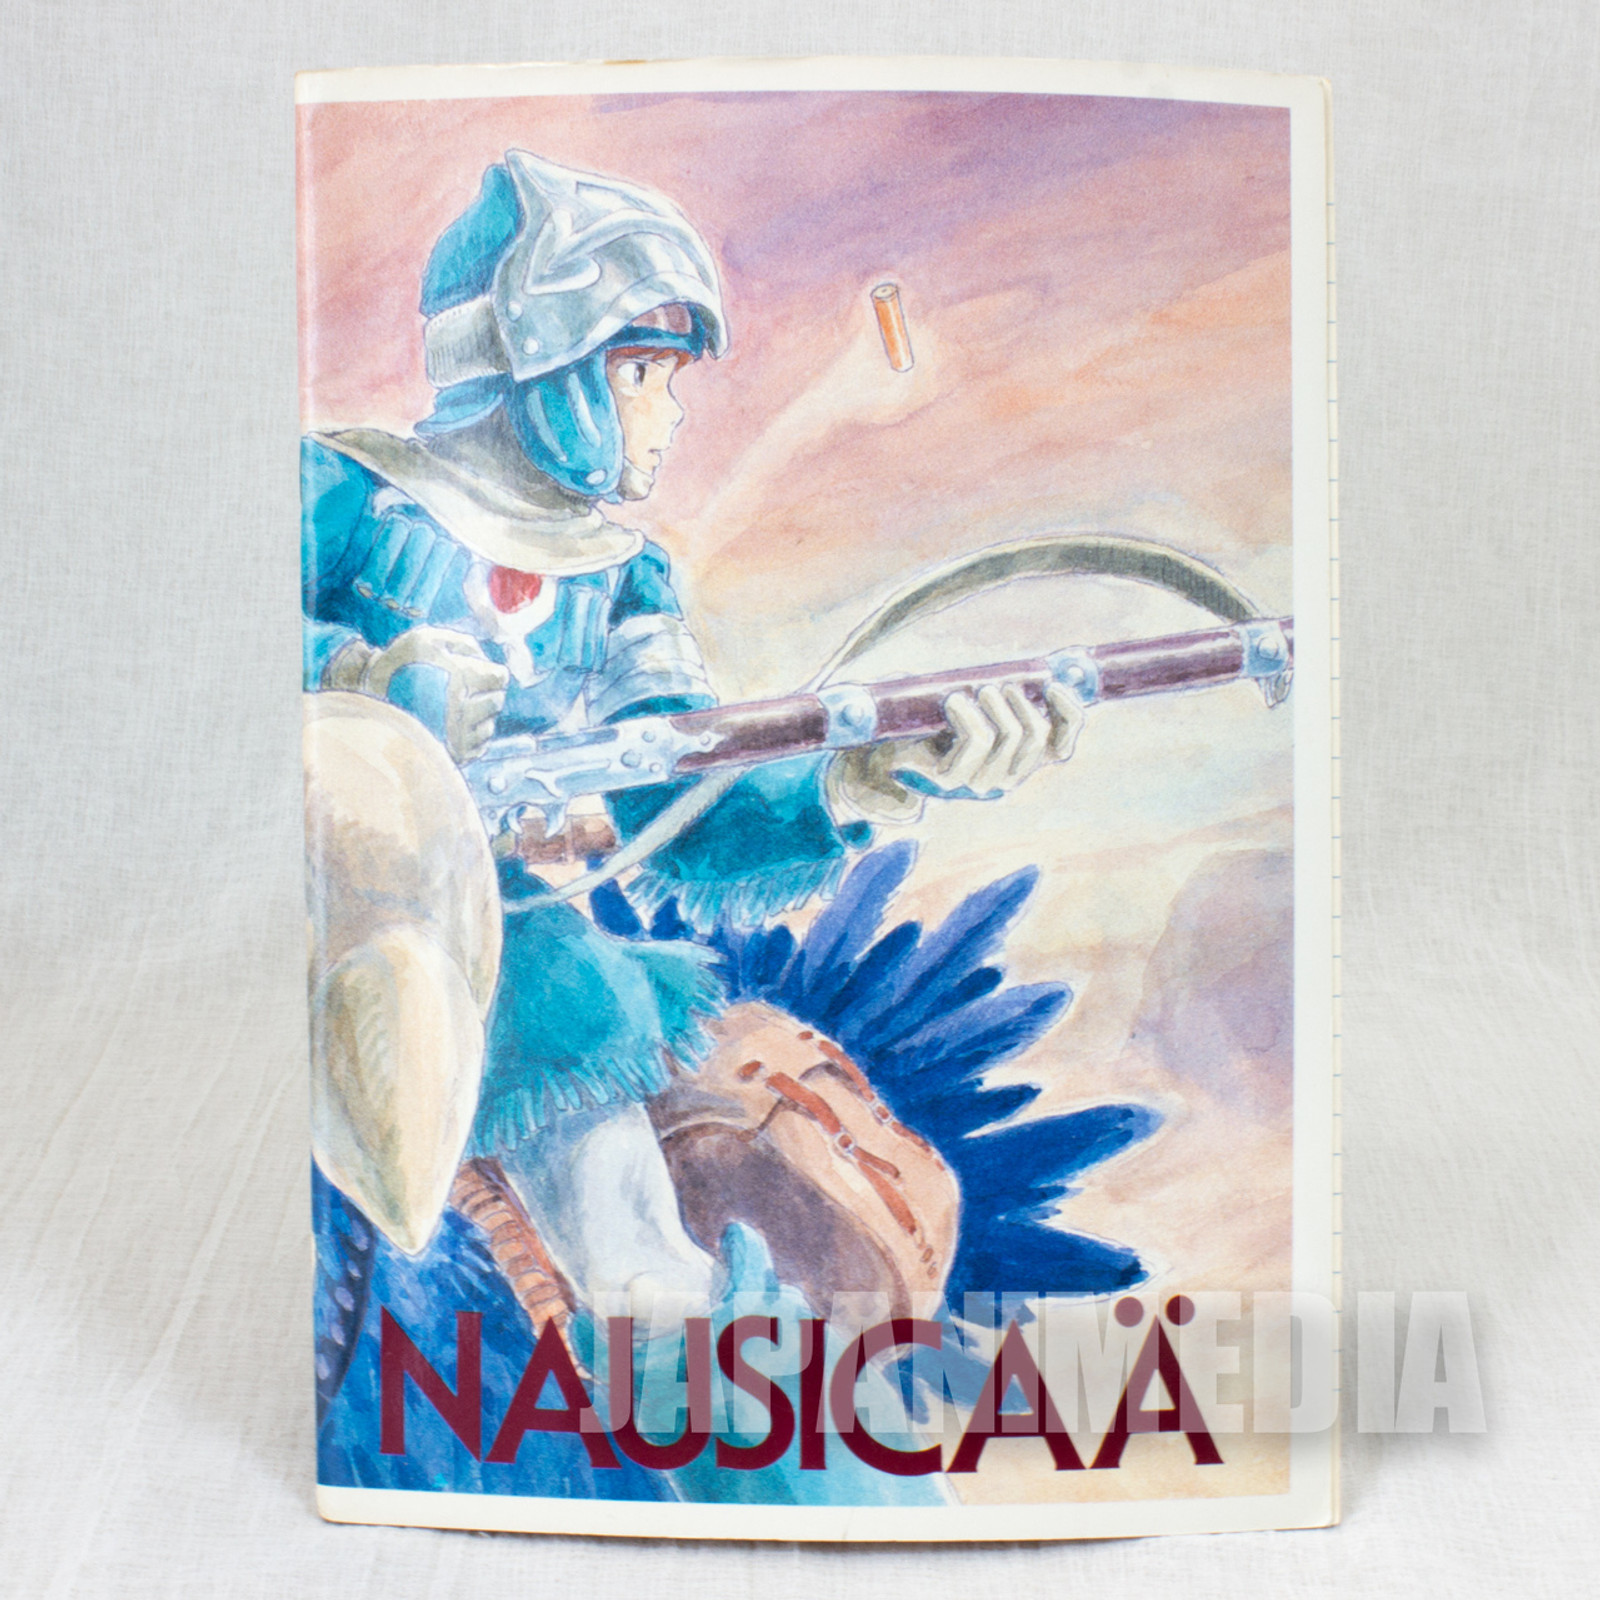 Retro RARE Nausicaa of the Valley Notebook #2 Ghibli JAPAN ANIME MANGA